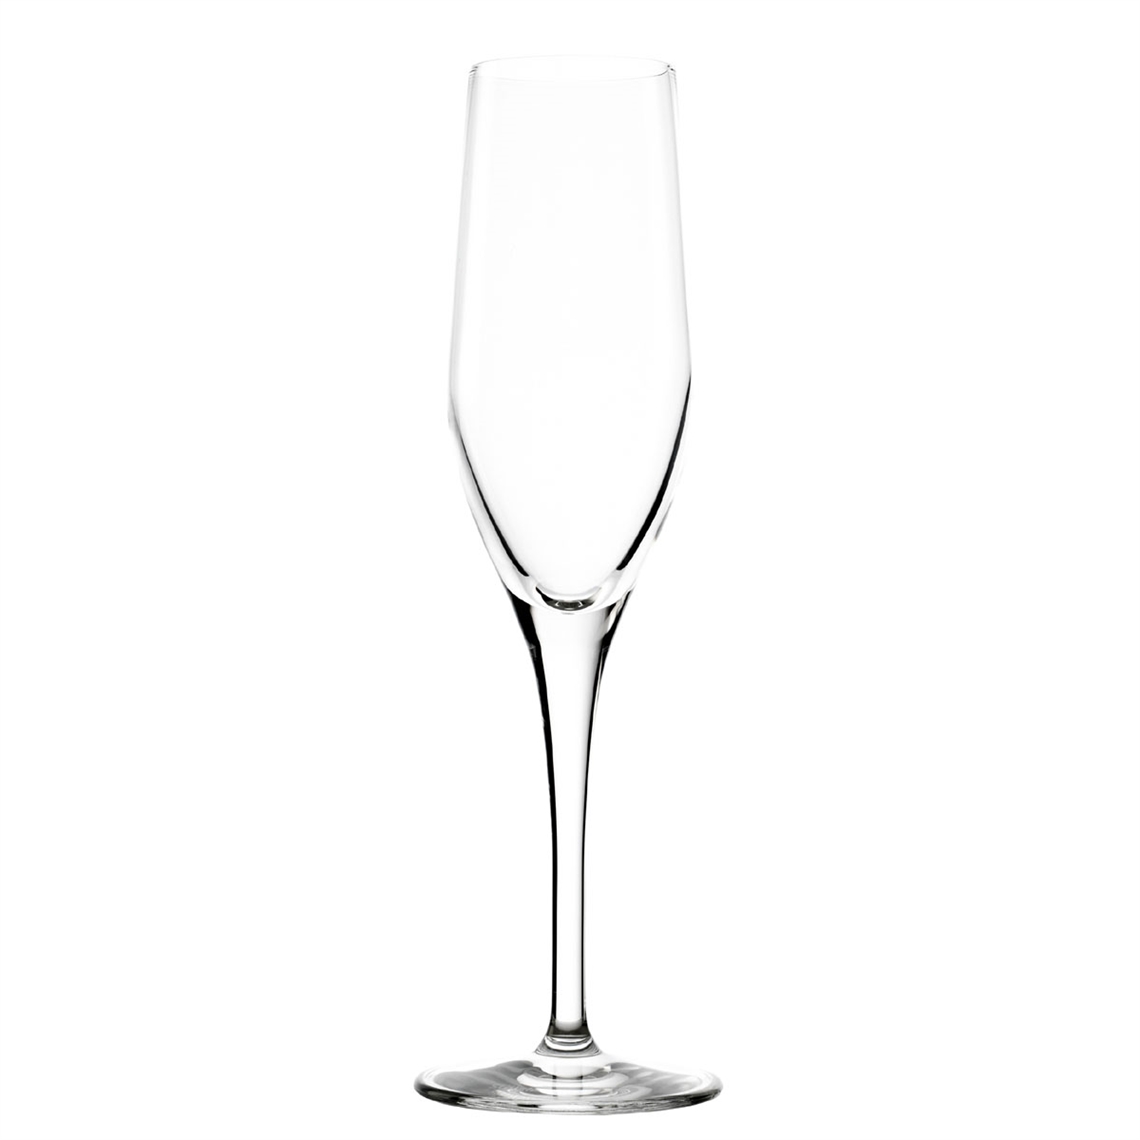 Stolzle Exquisit Champagne Glasses / Flute - Set of 6